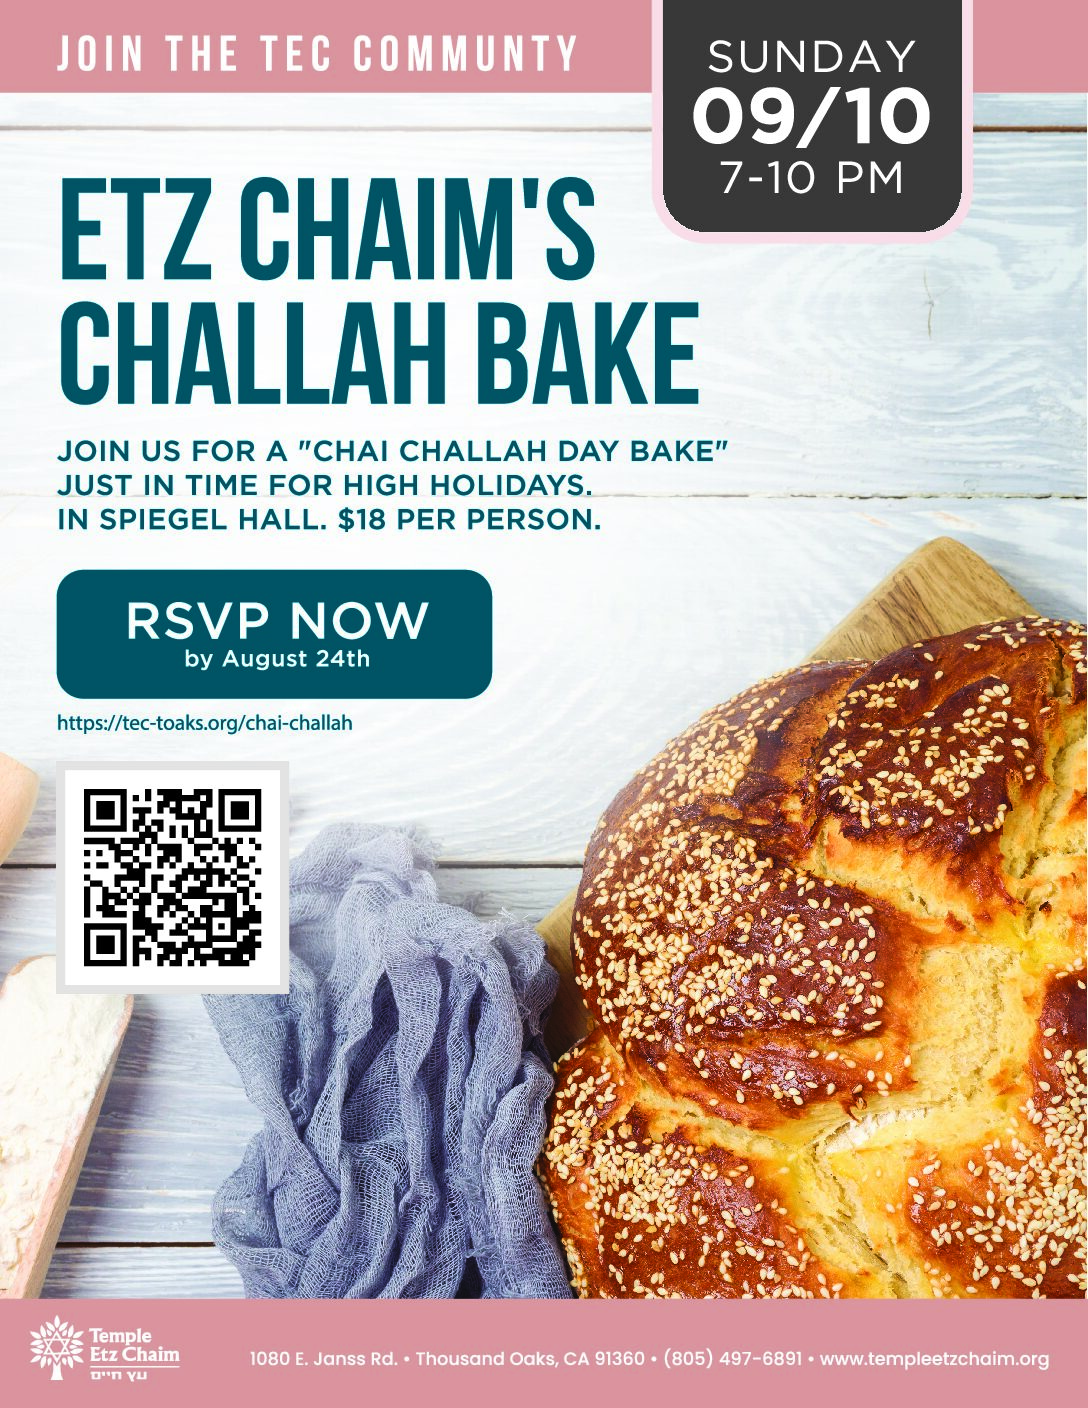 Etz Chaim's Challah Bake